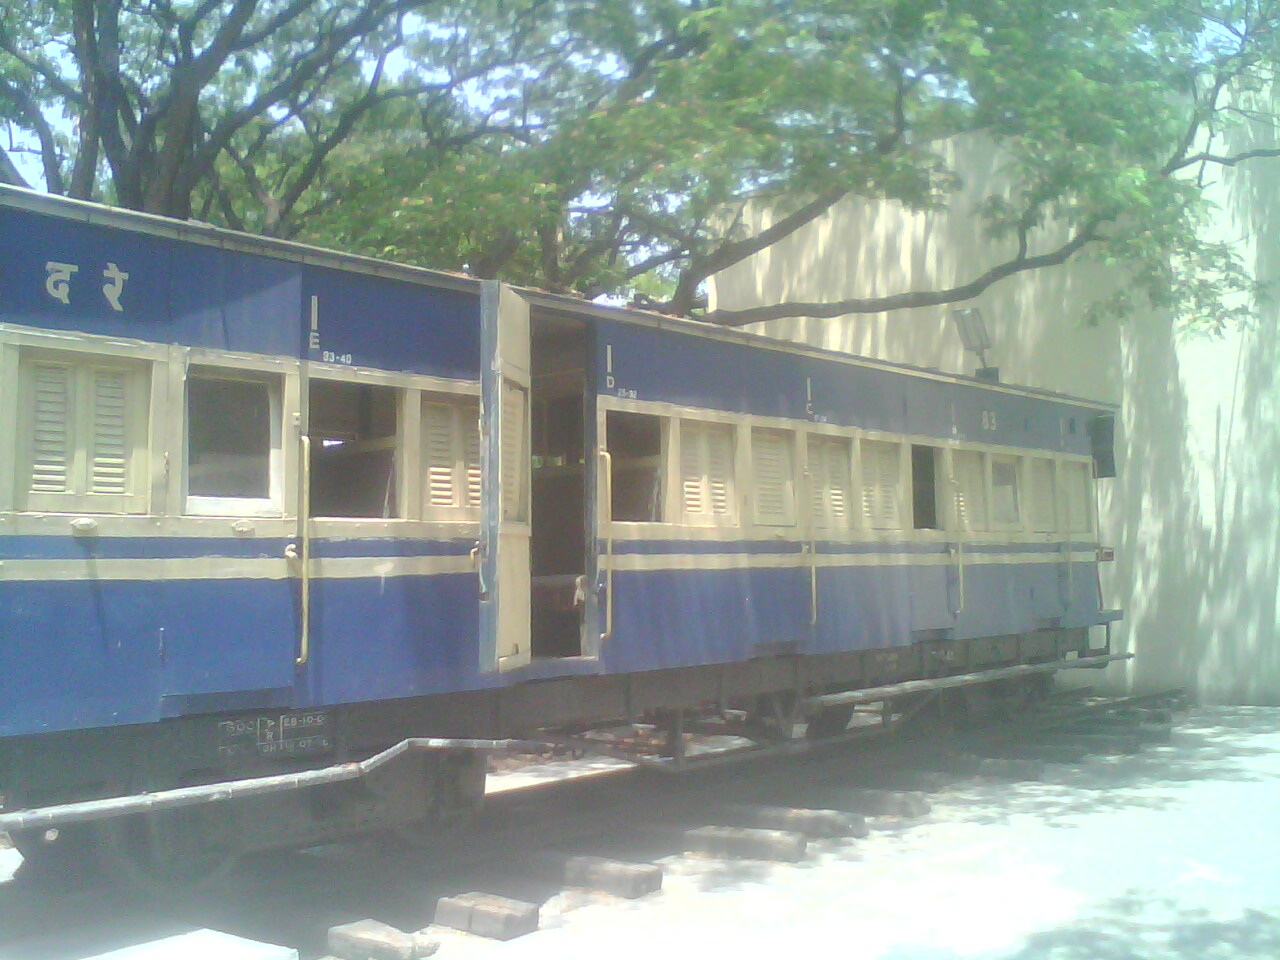 ICF Indian Rail Museum Chennai Photos of Indian Railway